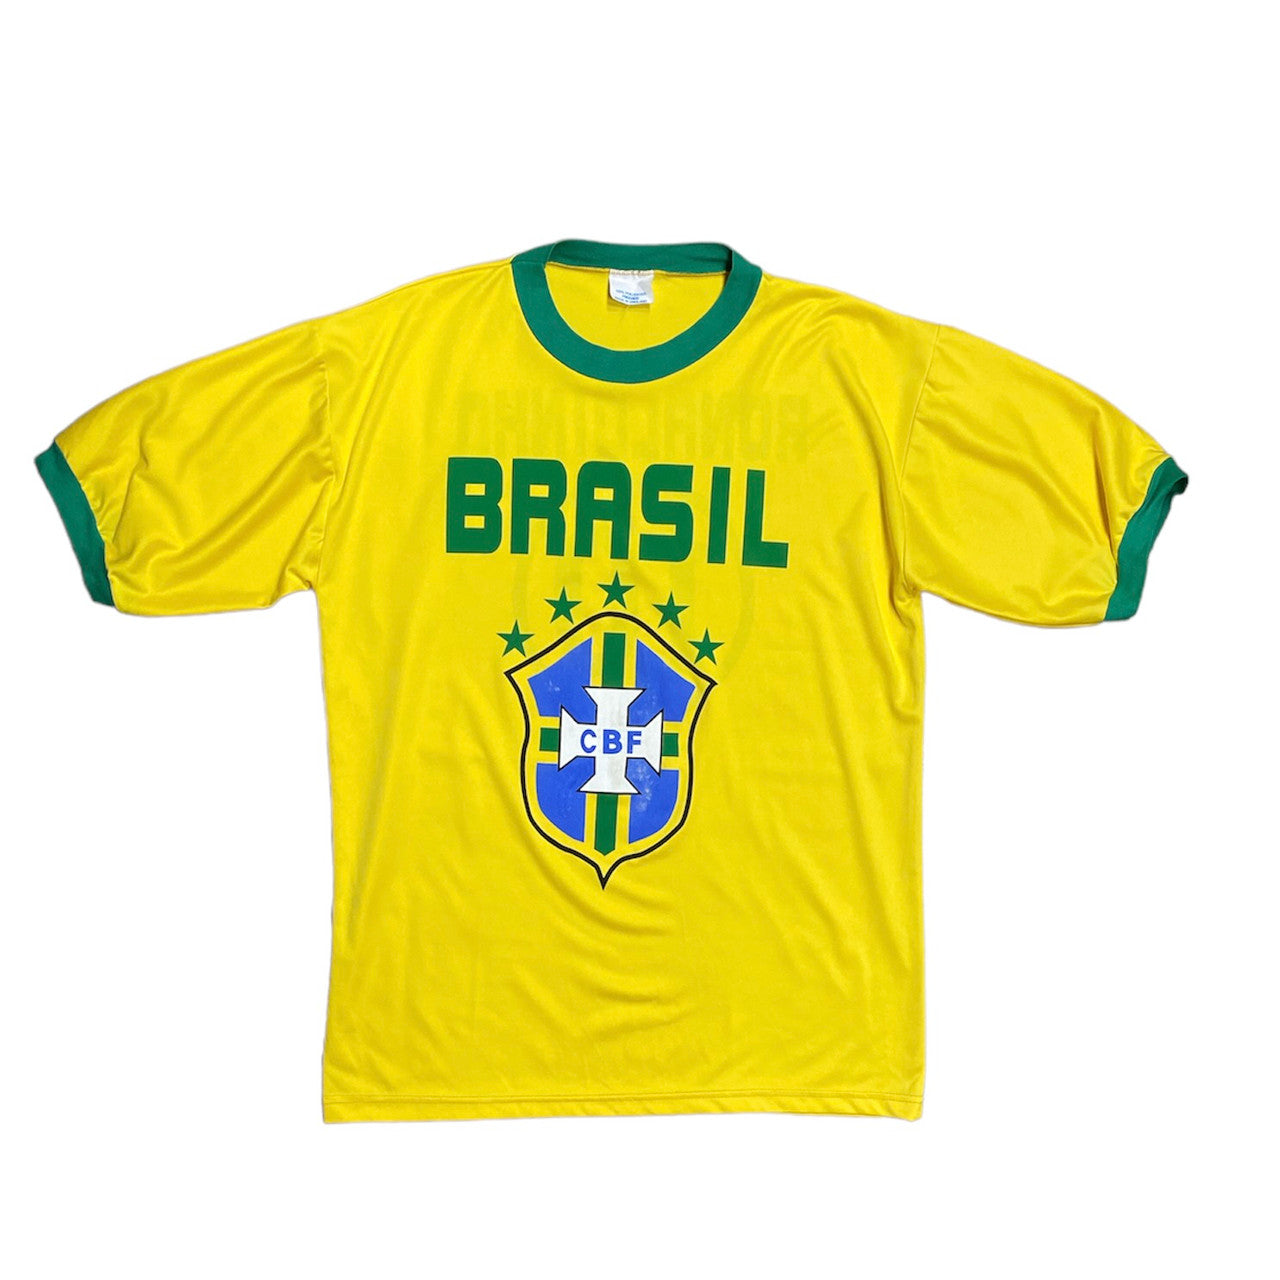 Brasil Ronaldinho Football Jersey